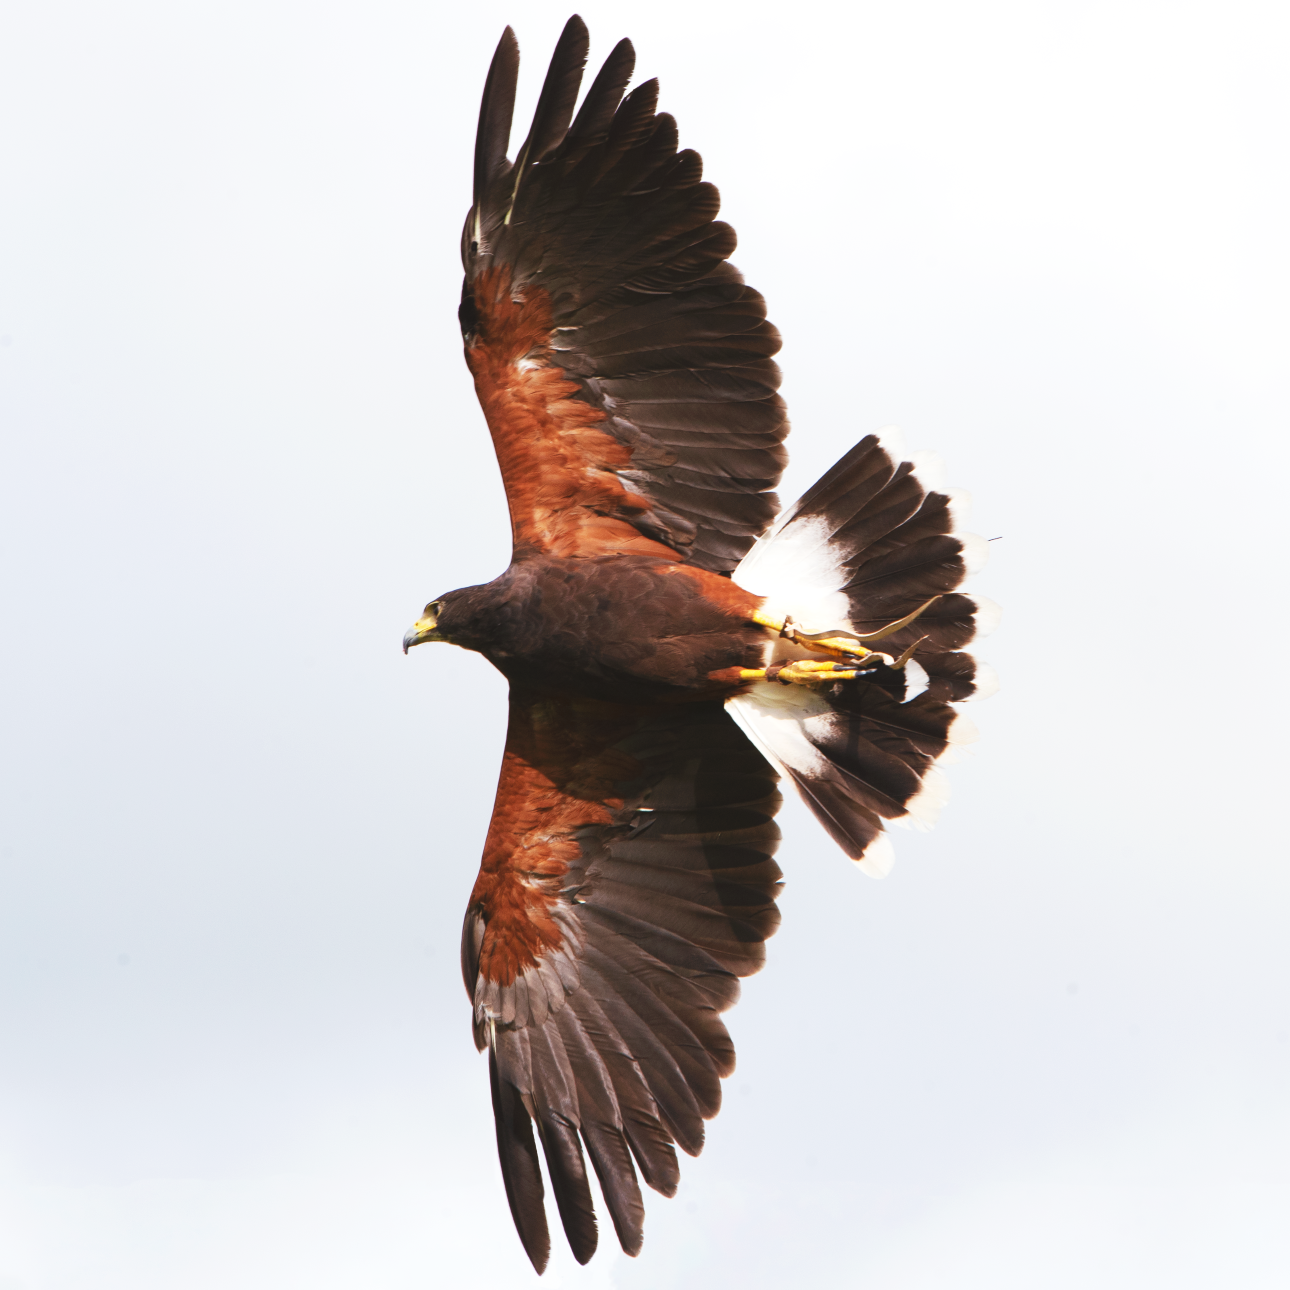 Harris Hawk in a bird of prey display